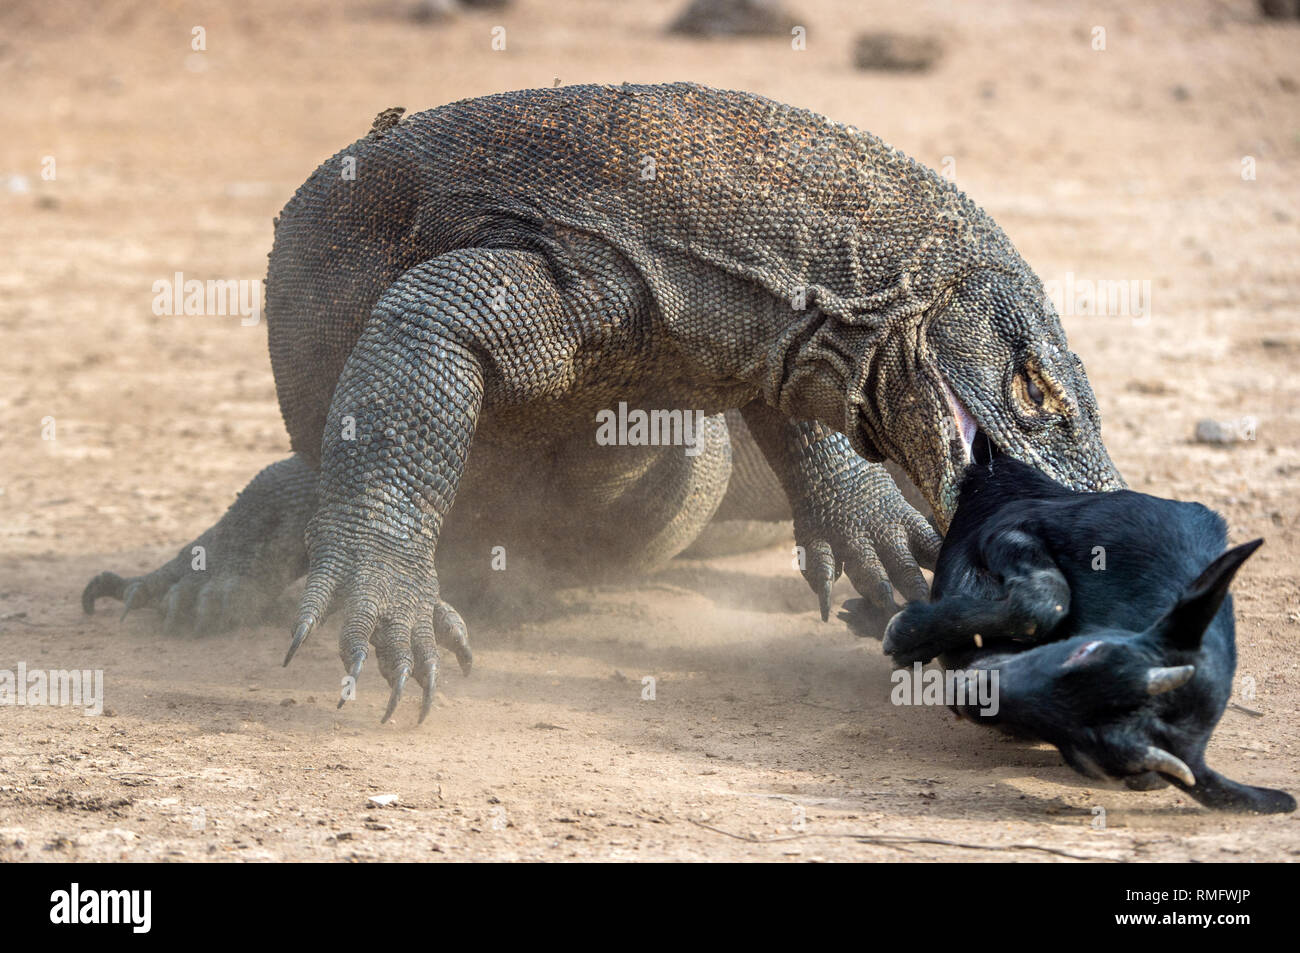 The dragon attacks. The Komodo dragon with the prey. The Komodo dragon, Scientific name: Varanus komodoensis, is the biggest living lizard in the worl Stock Photo